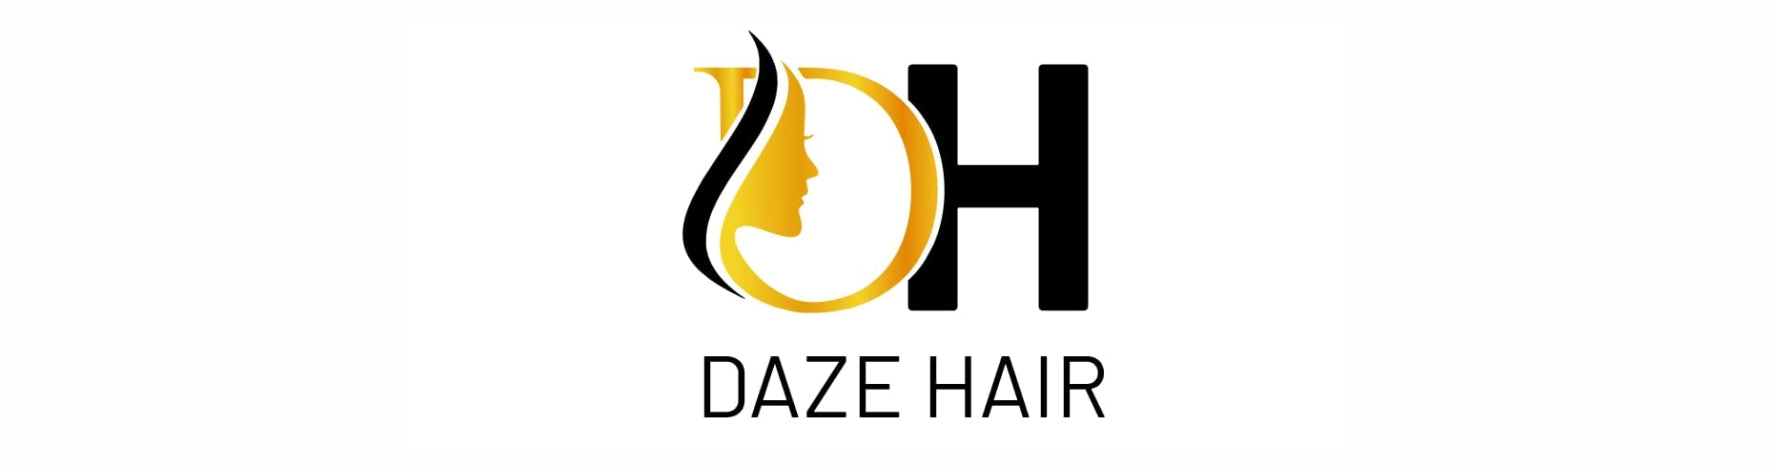 Daze Hair